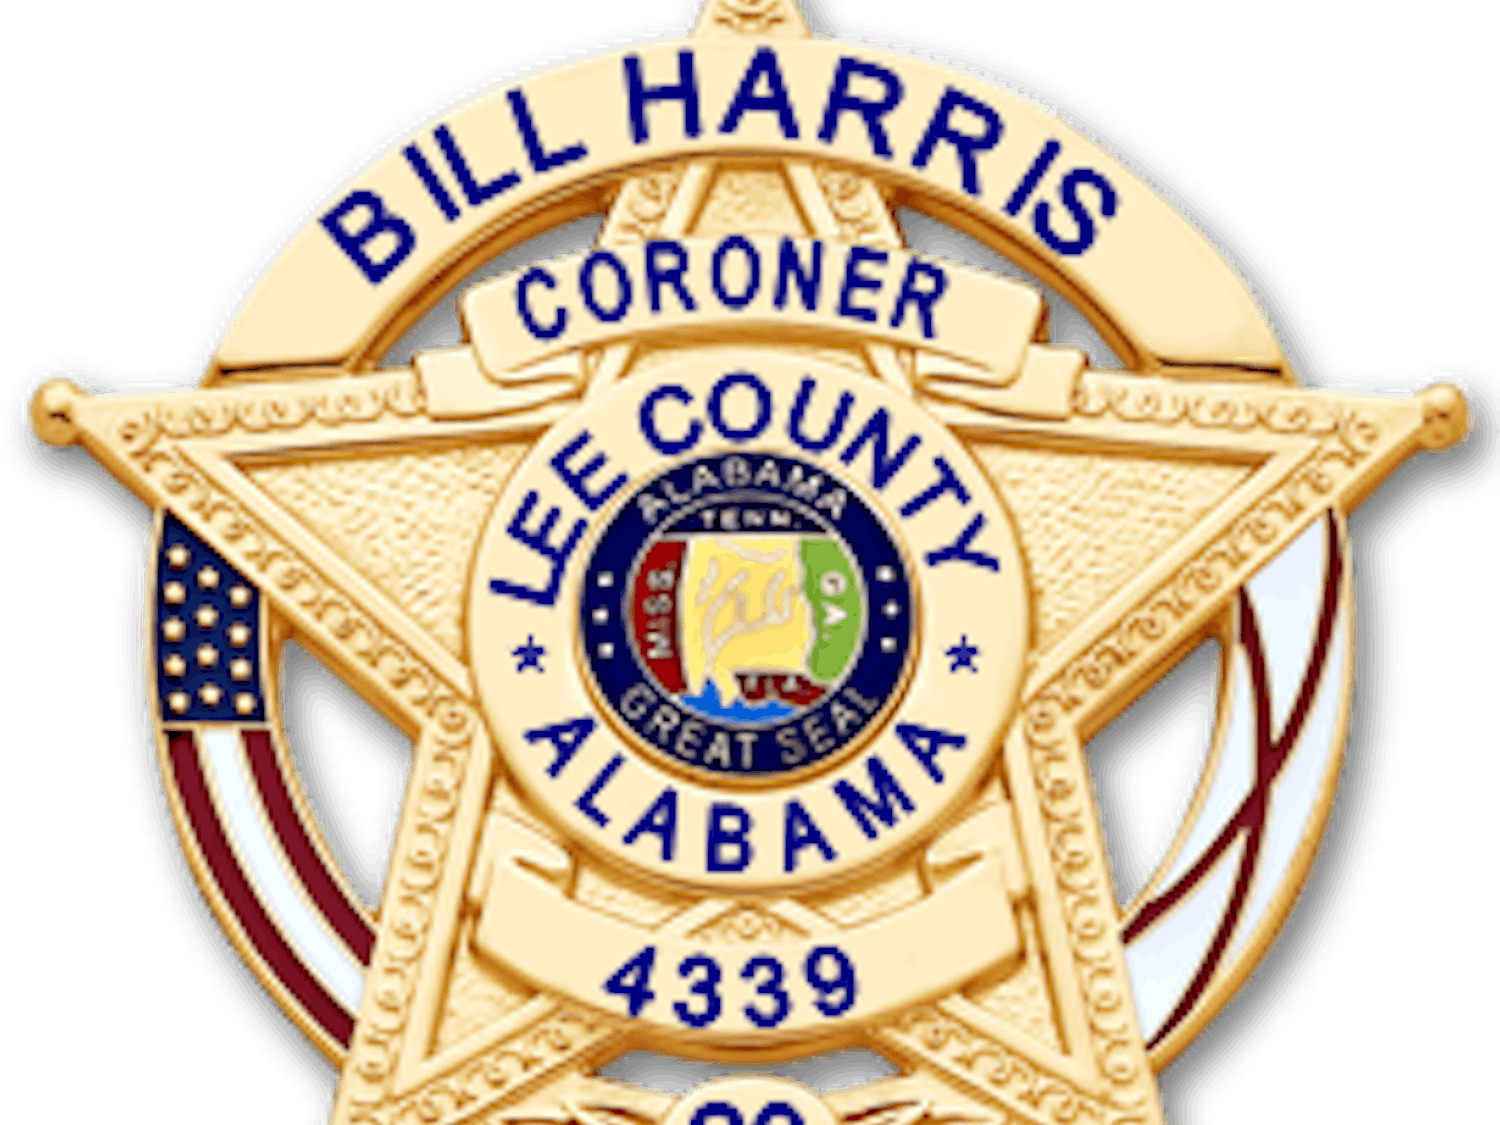 Lee County Coroner Bil Harris' badge. 